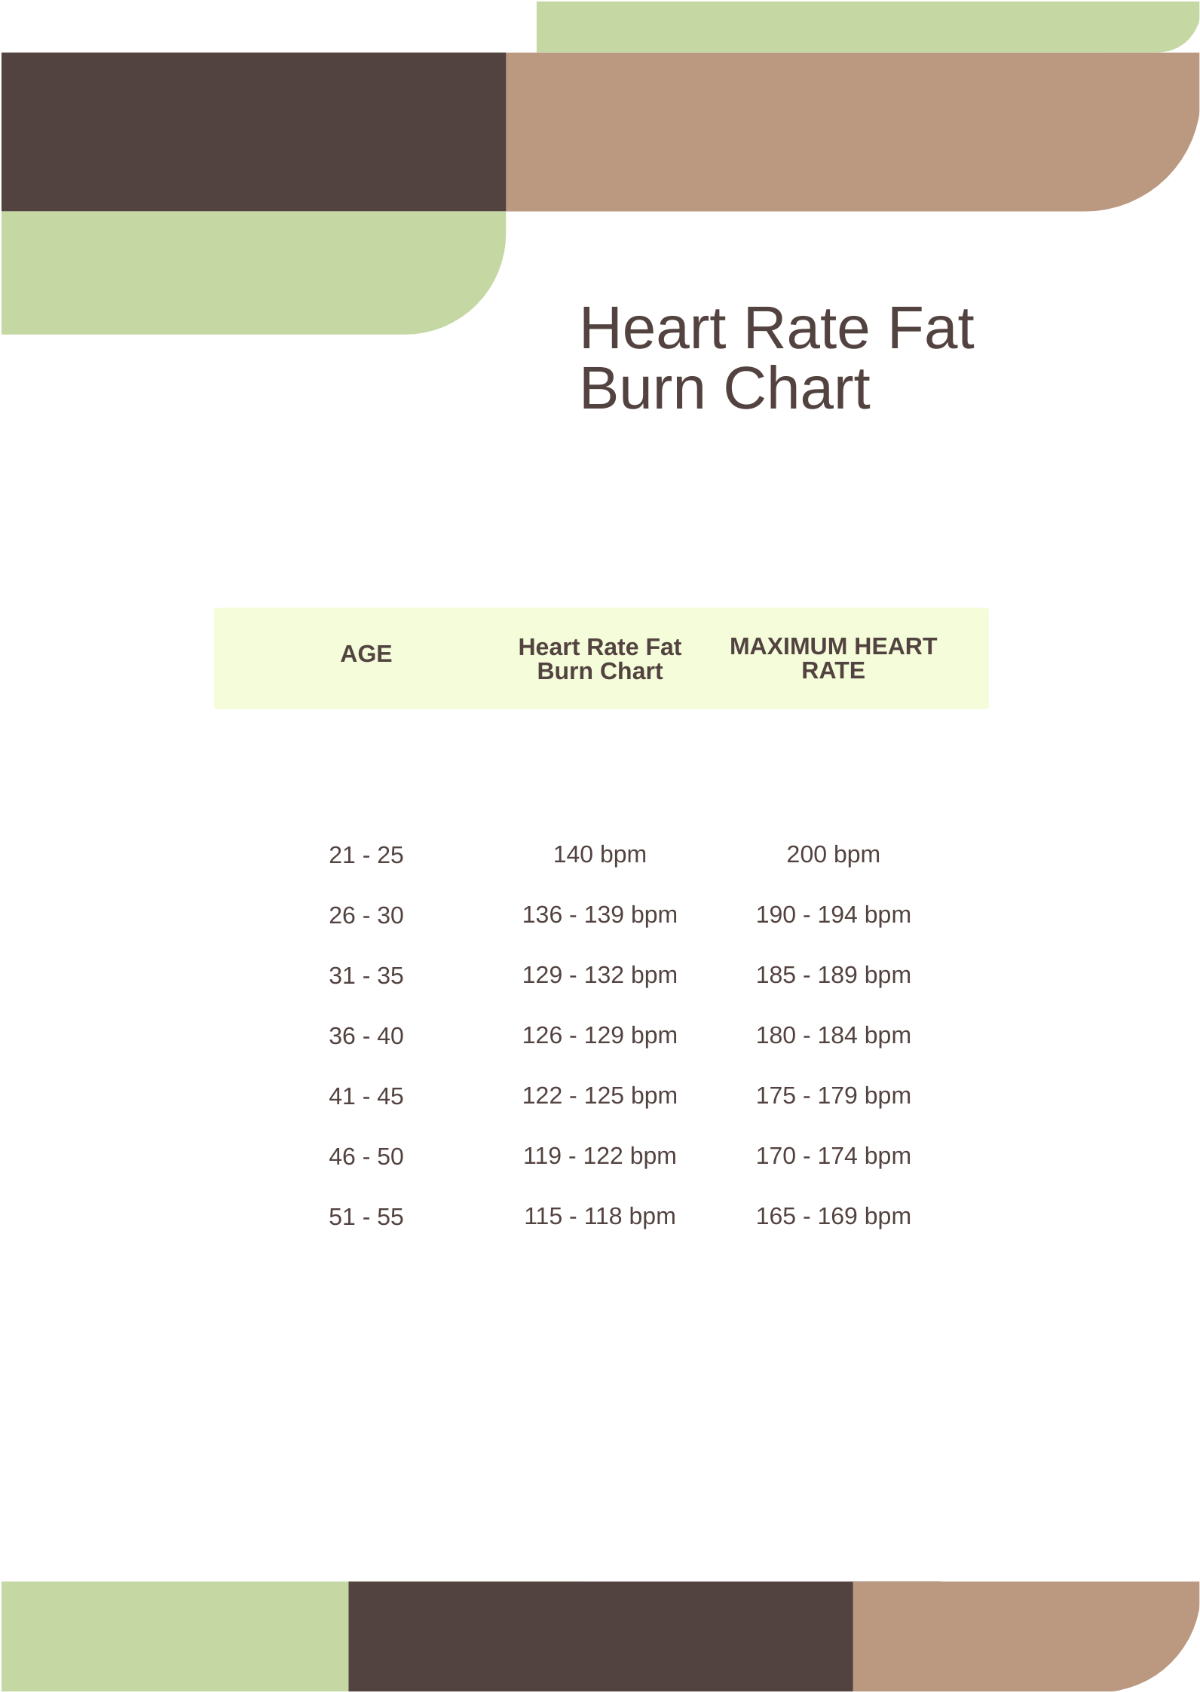 Heart Rate Fat Burn Chart Template